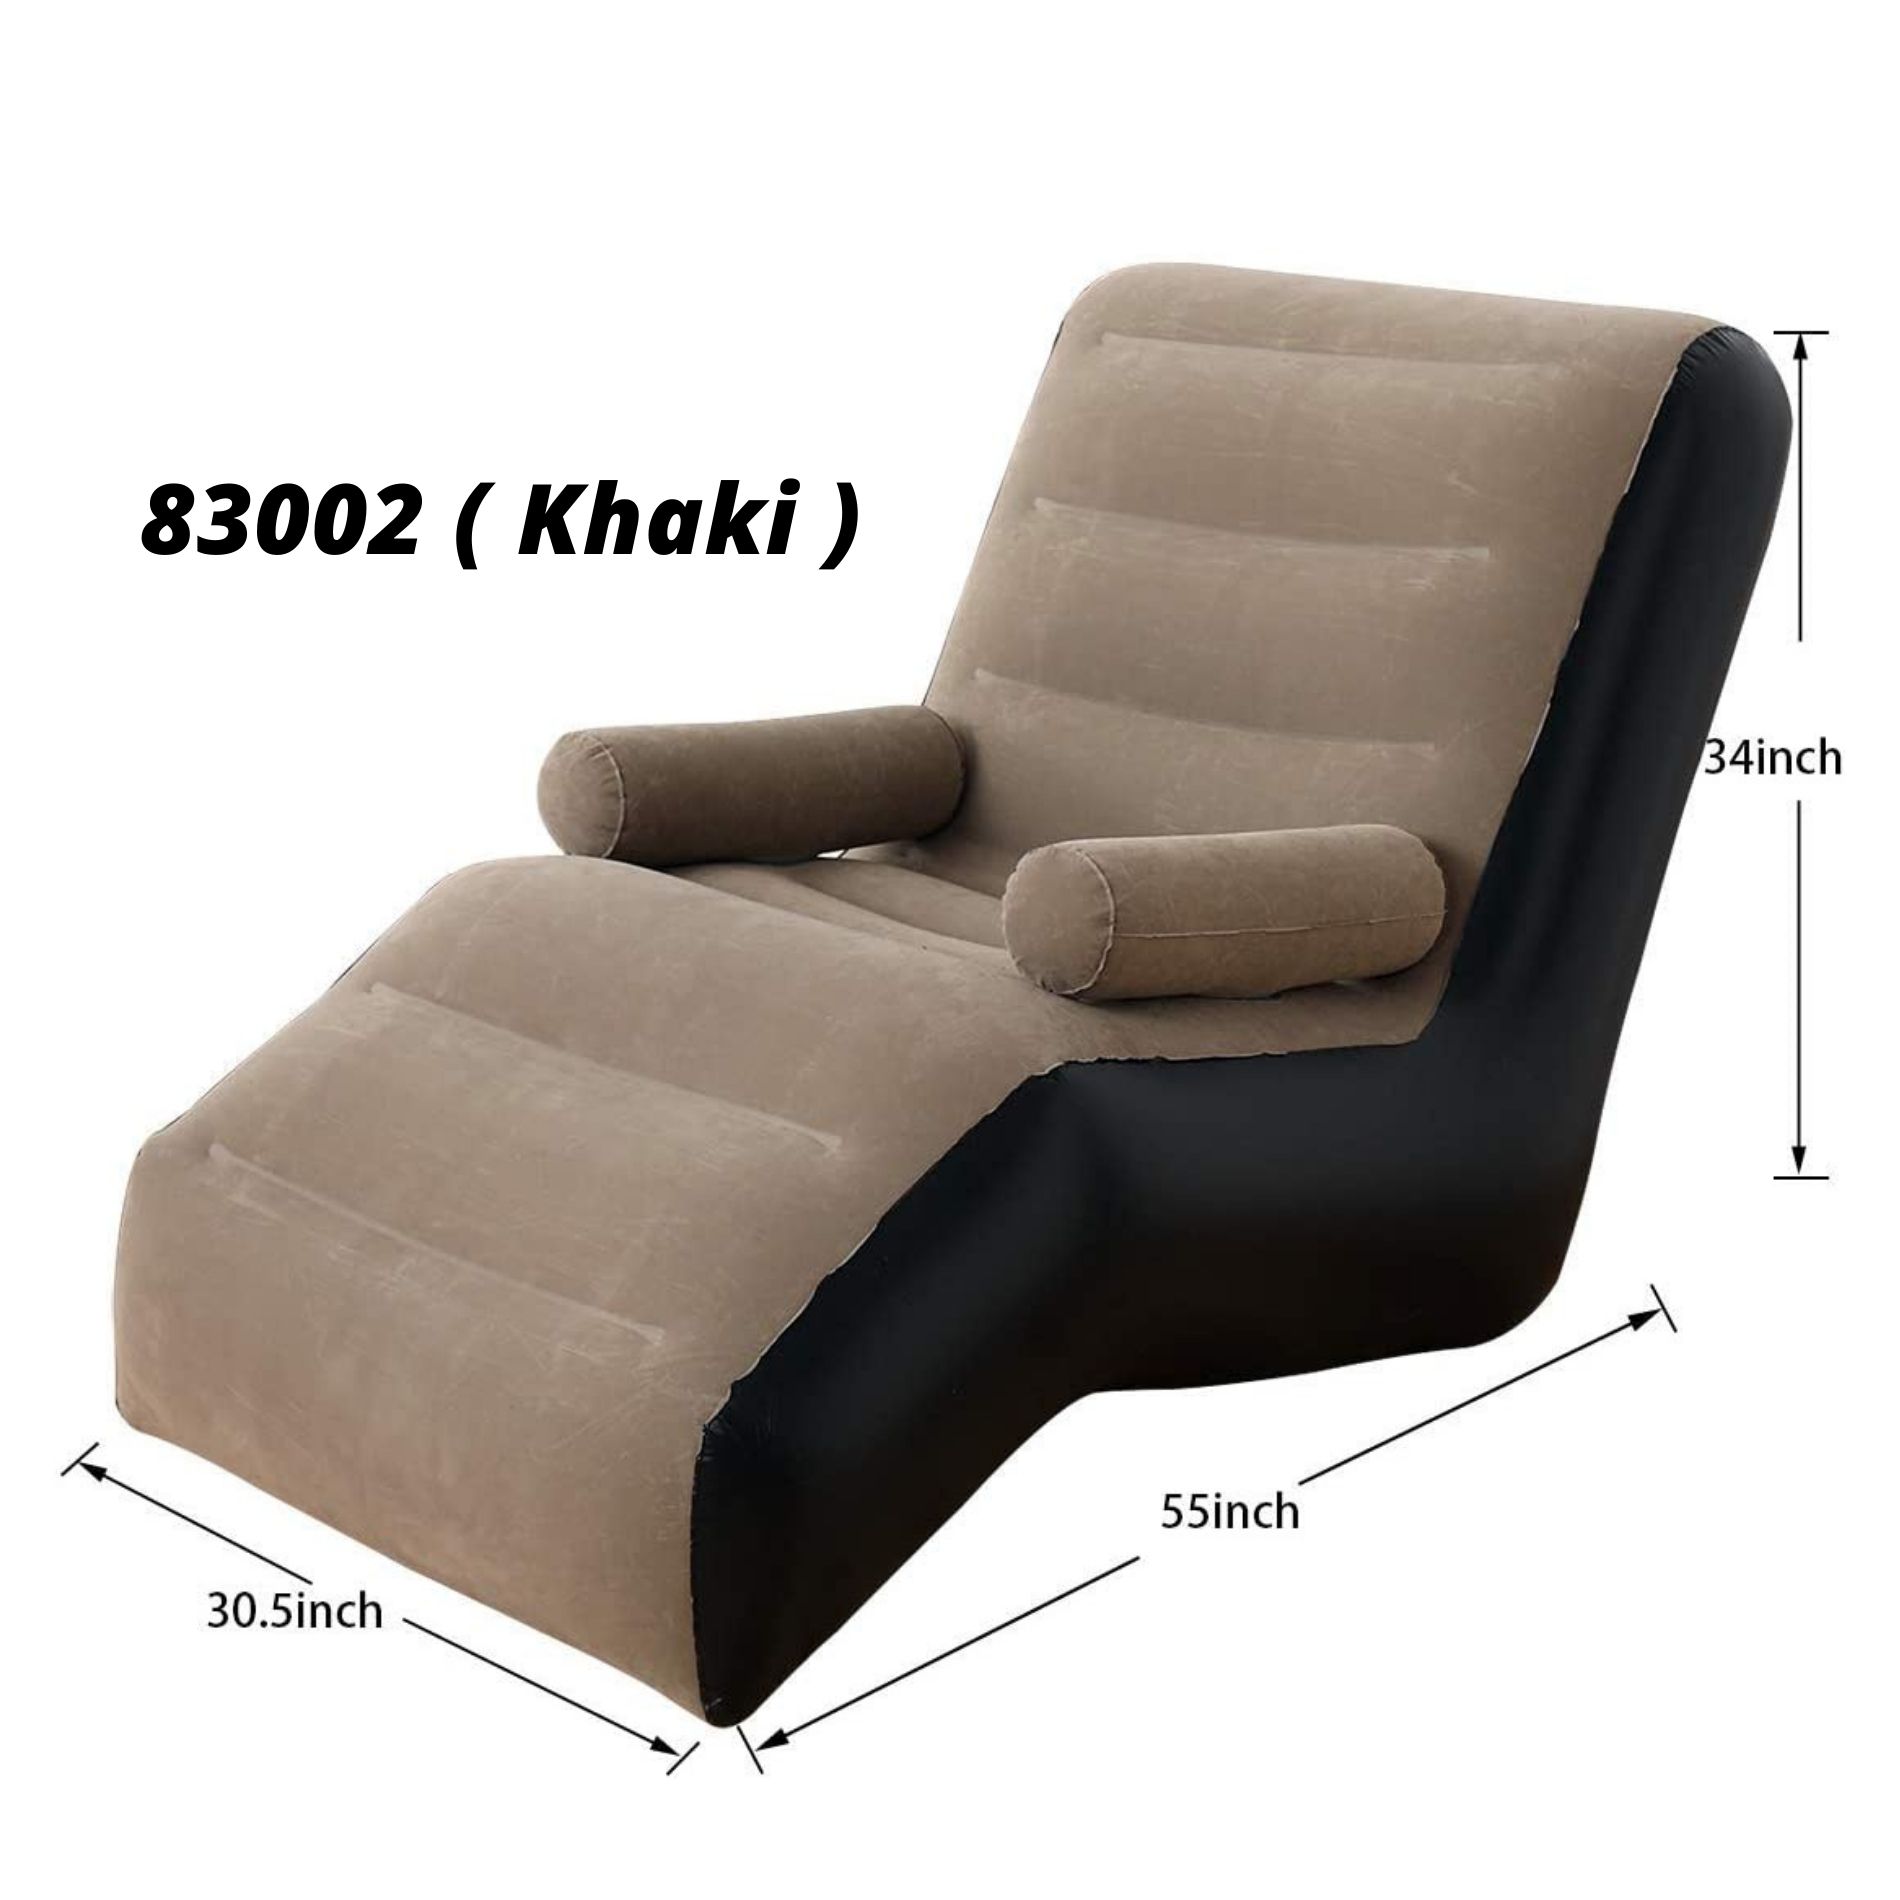 83001 Pink / 83002 Khaki Inflatable Air Sofa Leisure Seat Bedroom Living Room Flocked Lounge Free Air Pump